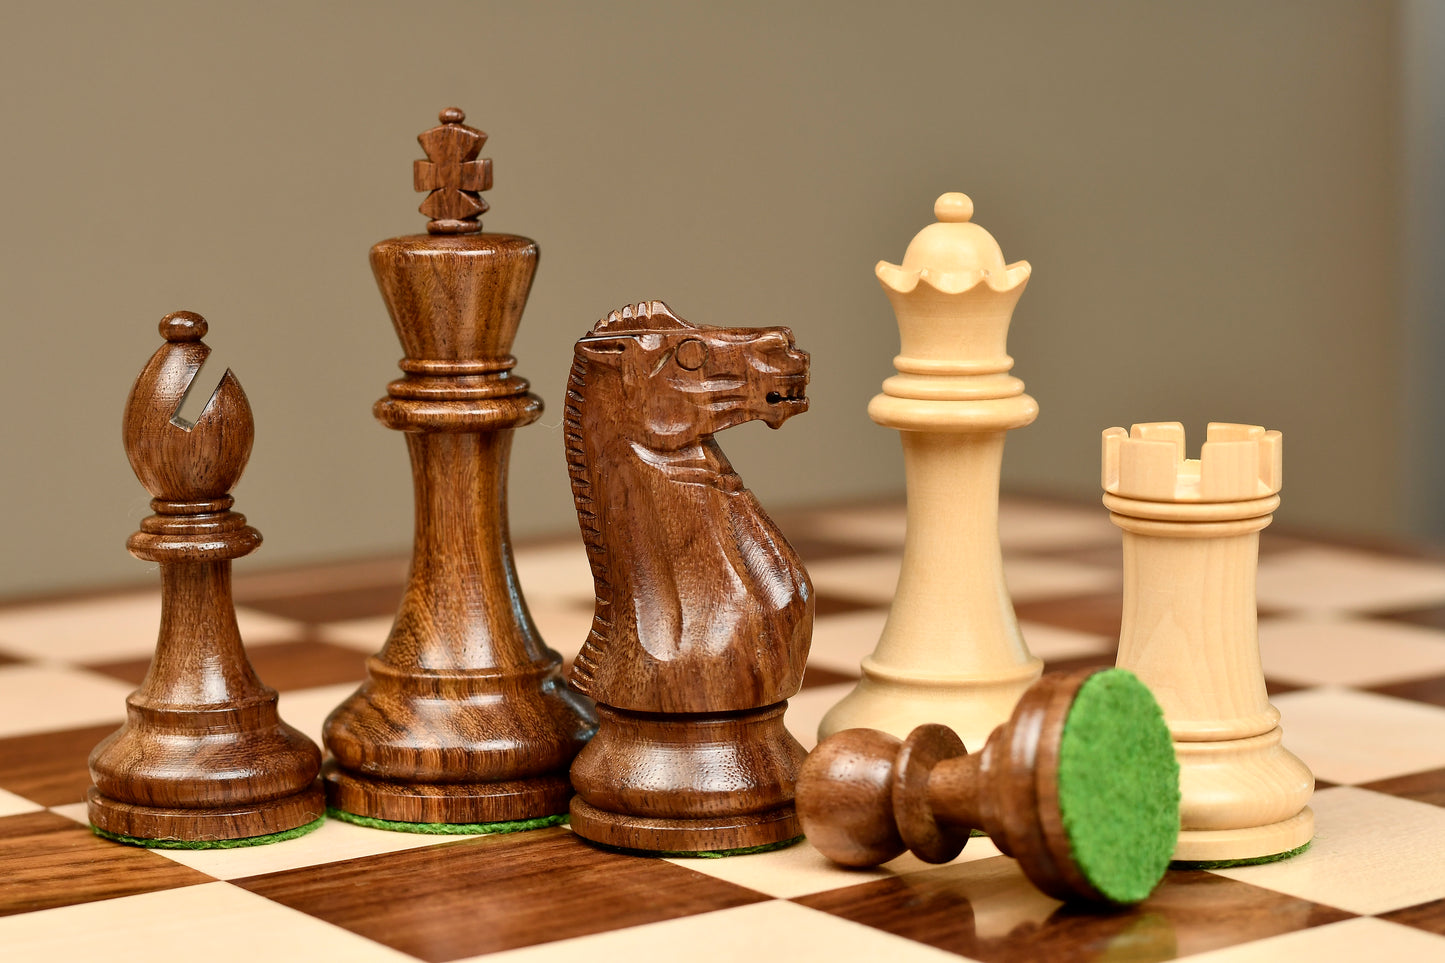 The CB Grandmaster Staunton Series Chess Pieces - 3.75" King